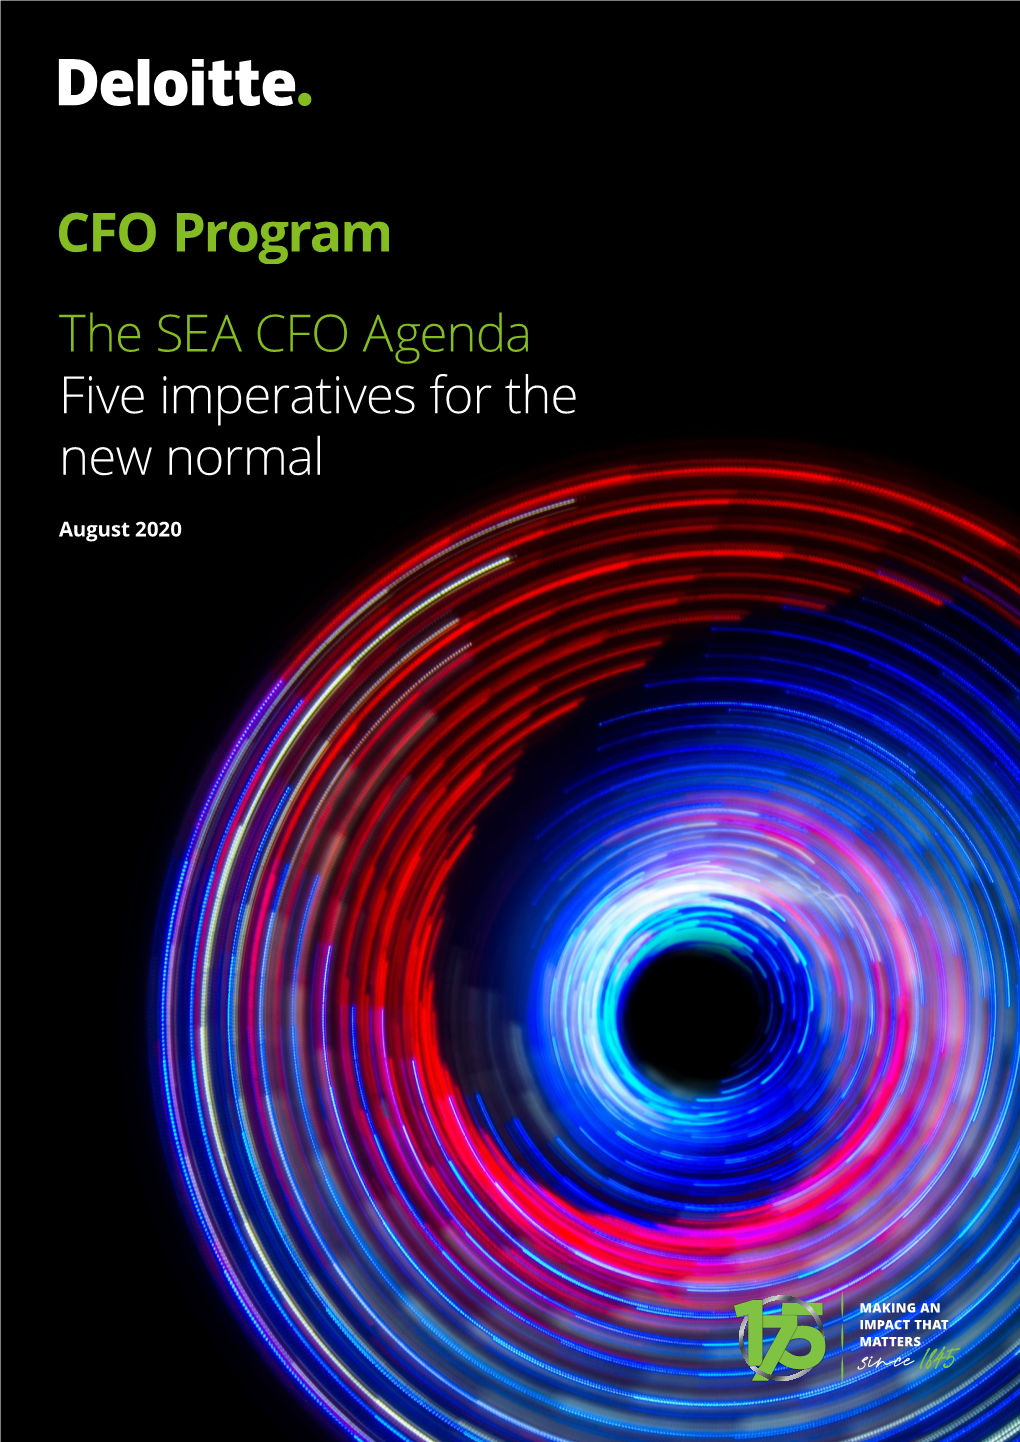 The SEA CFO Agenda Five Imperatives for the New Normal